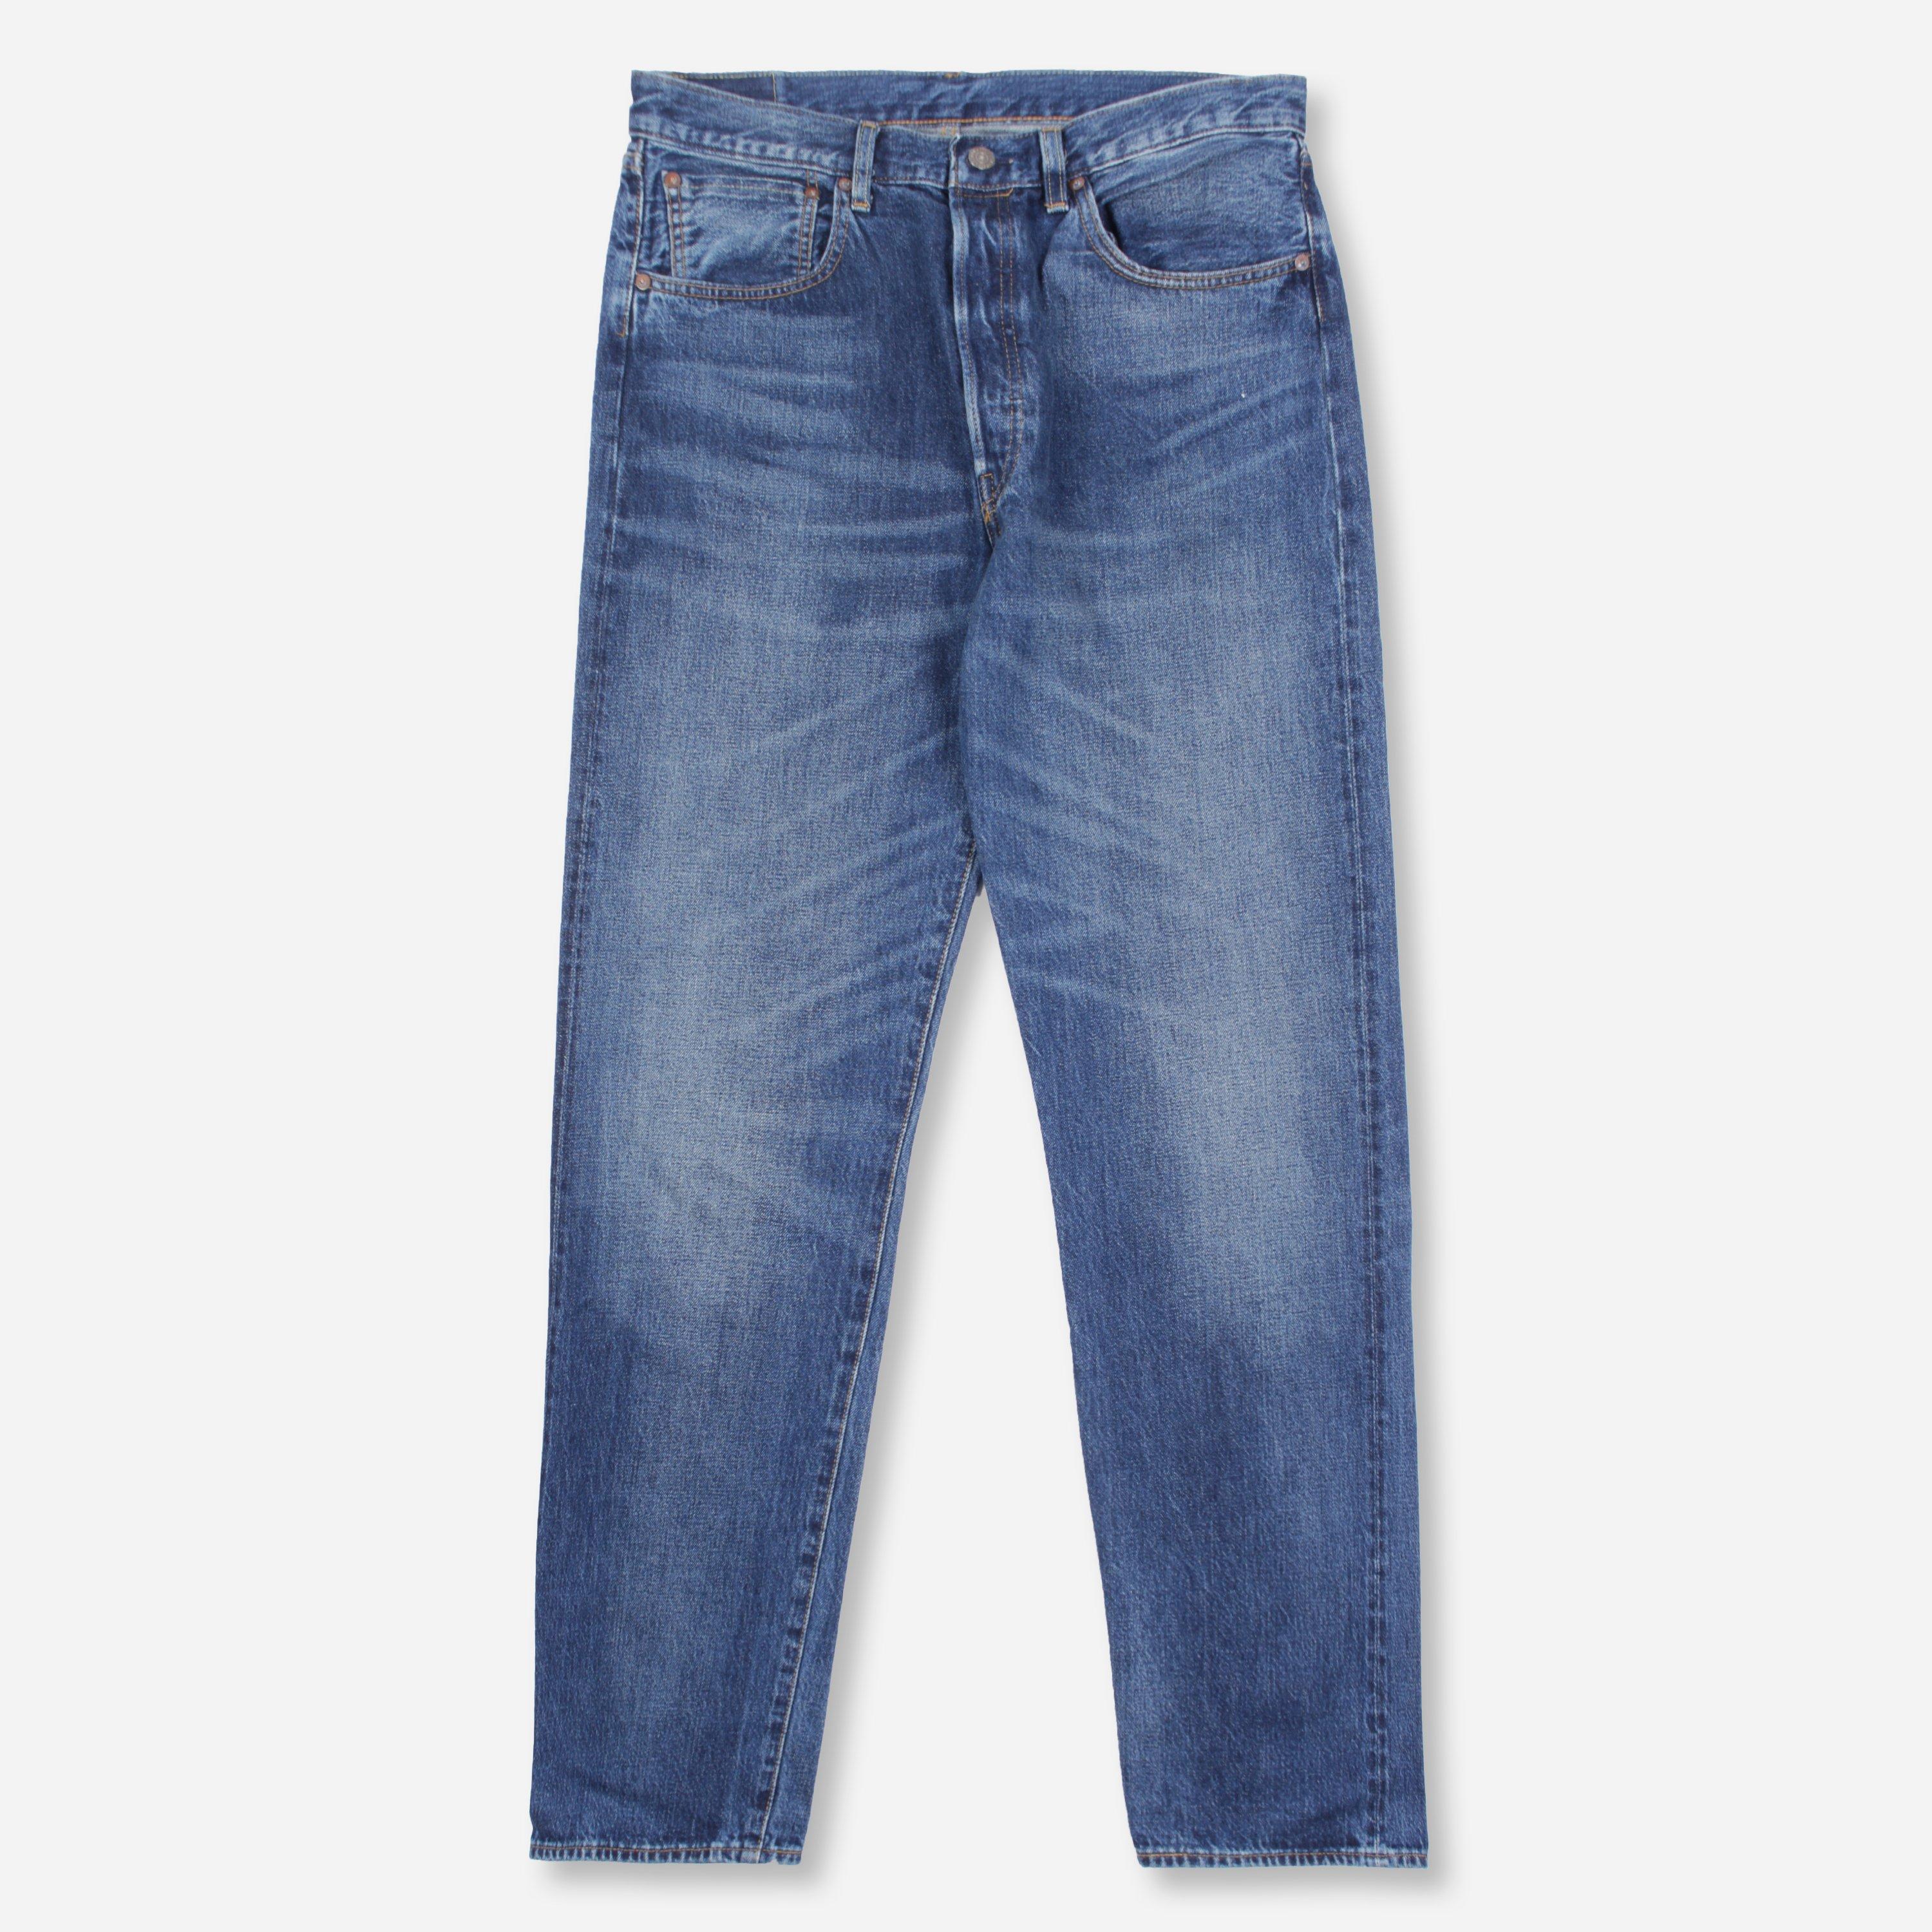 Levi's Denim 1955 501 Jeans in Blue for Men - Lyst